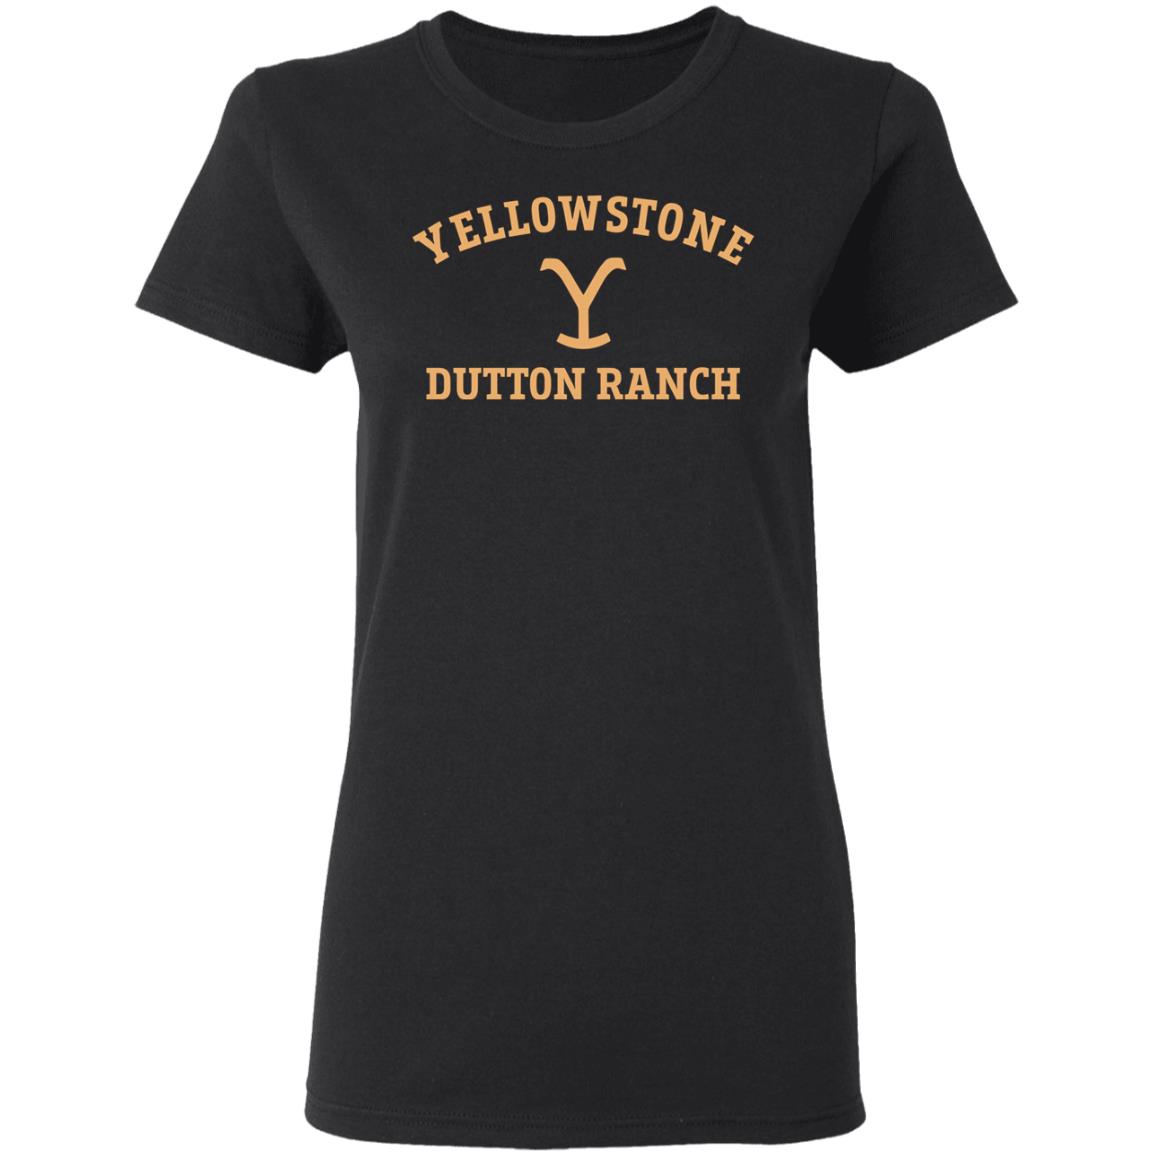 Yellowstone Dutton Ranch shirt - Rockatee